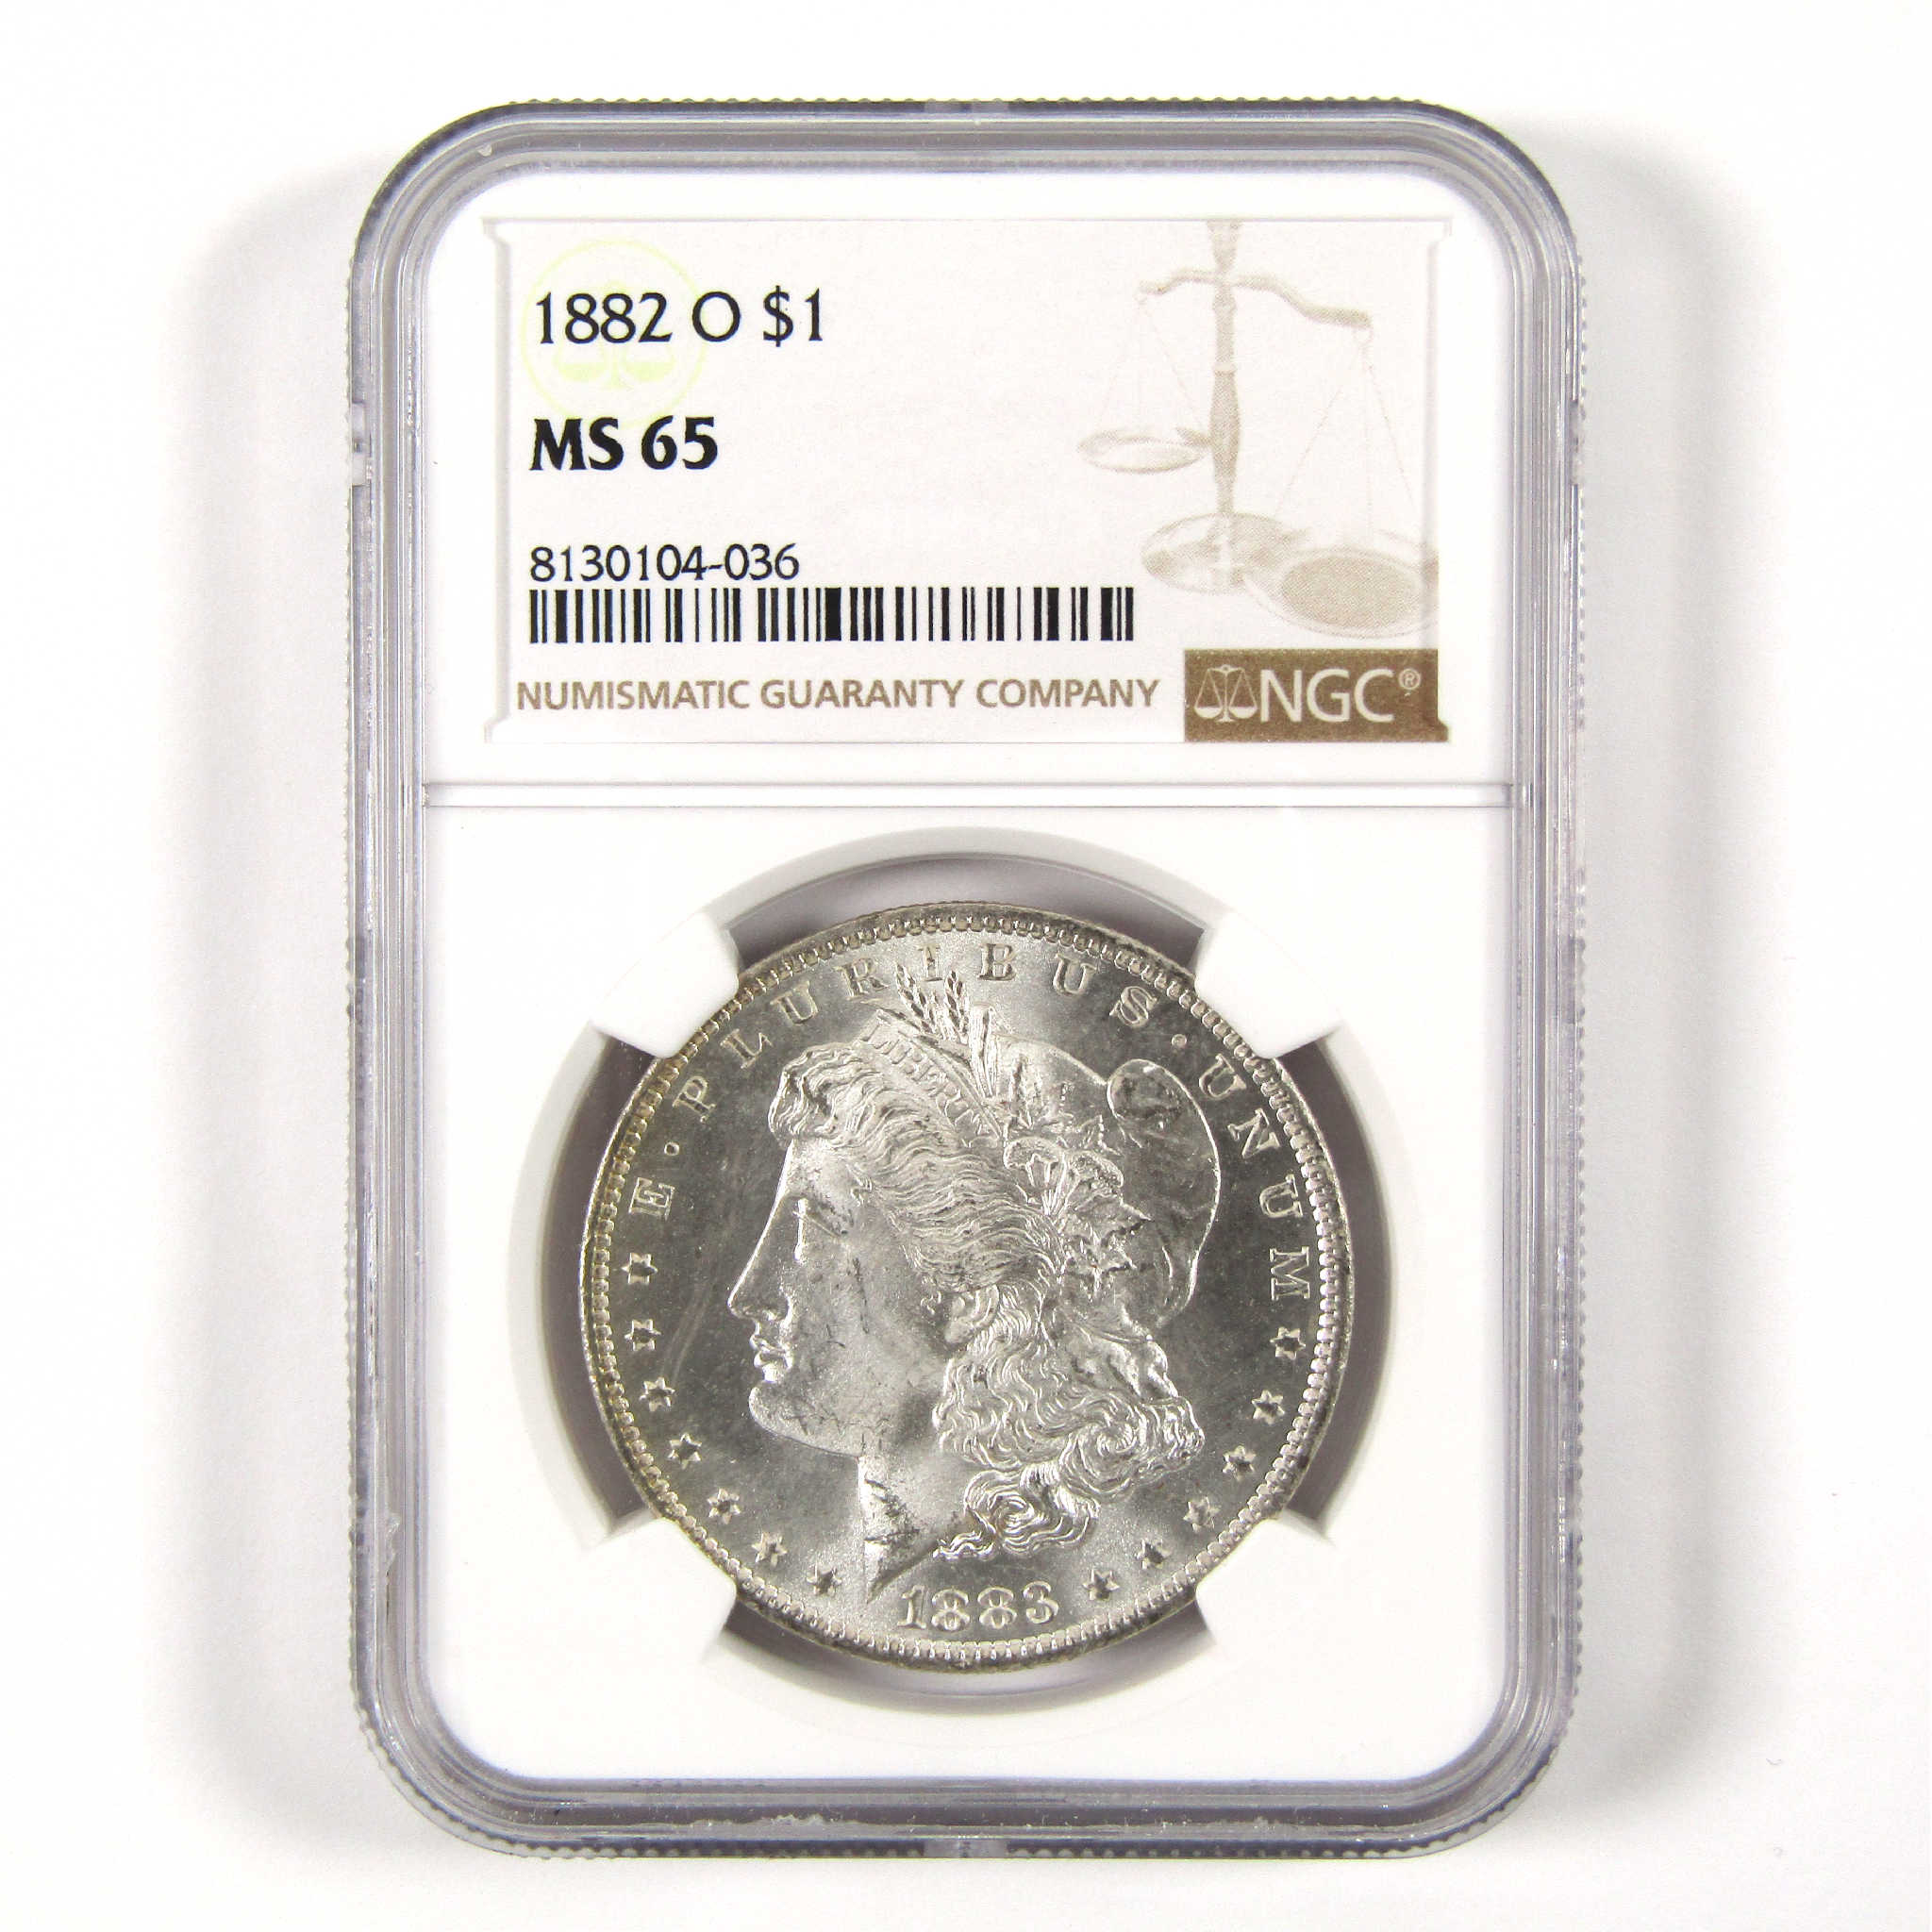 1882 O Morgan Dollar MS 65 NGC Silver $1 Uncirculated Coin SKU:CPC6275 - Morgan coin - Morgan silver dollar - Morgan silver dollar for sale - Profile Coins &amp; Collectibles